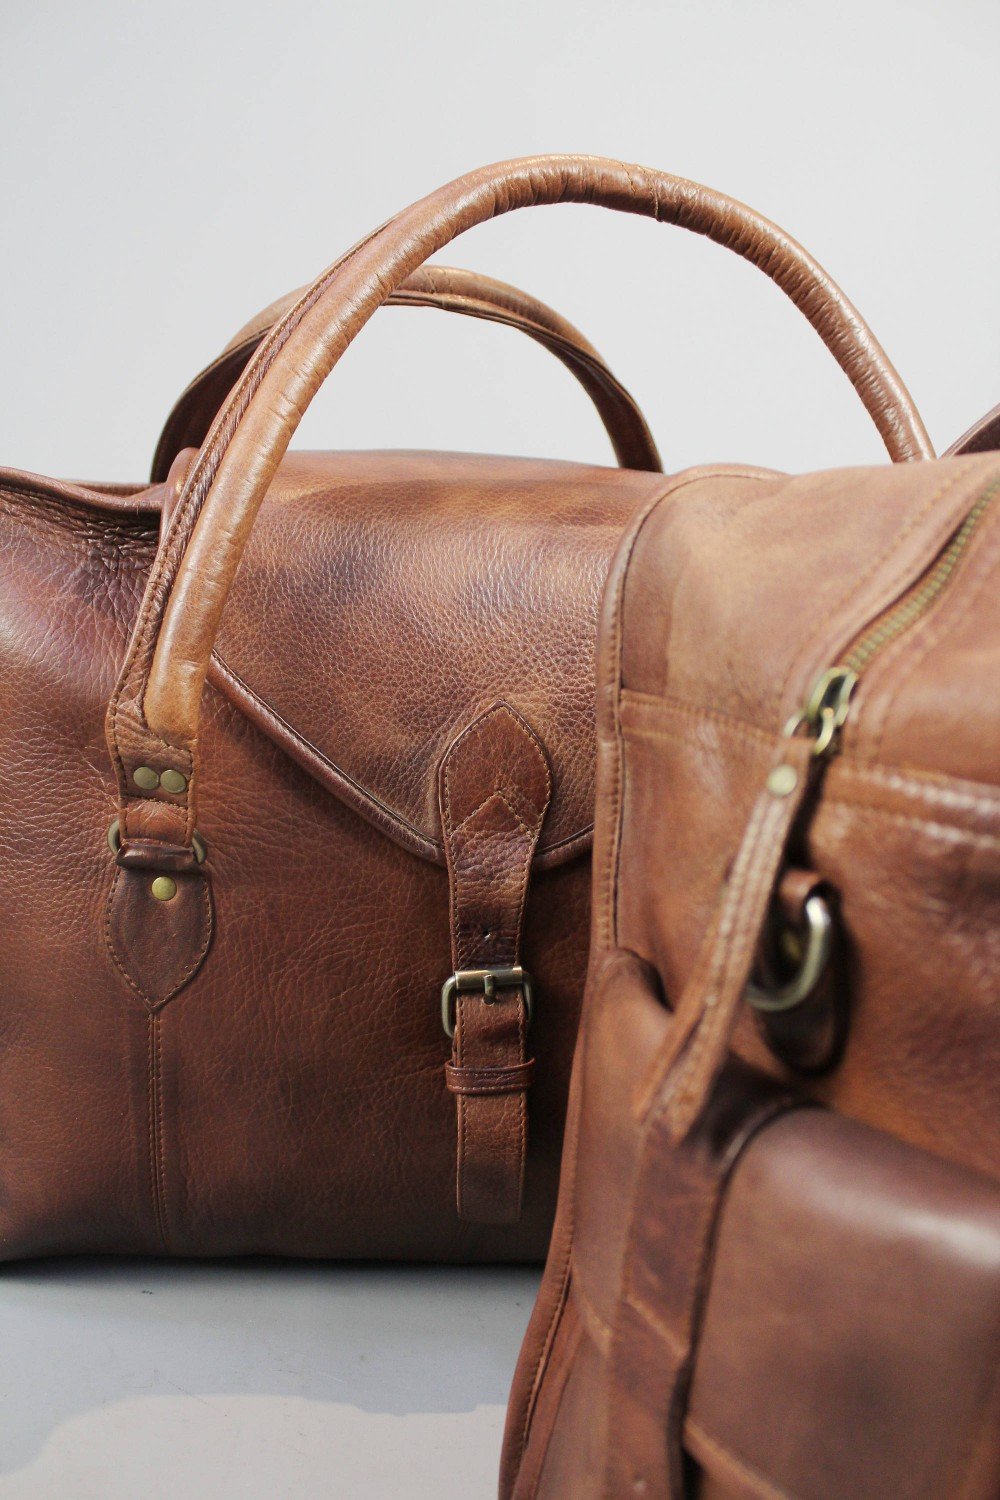 OES Travel Bag - Vintage Brown Leather - Bricks Masons